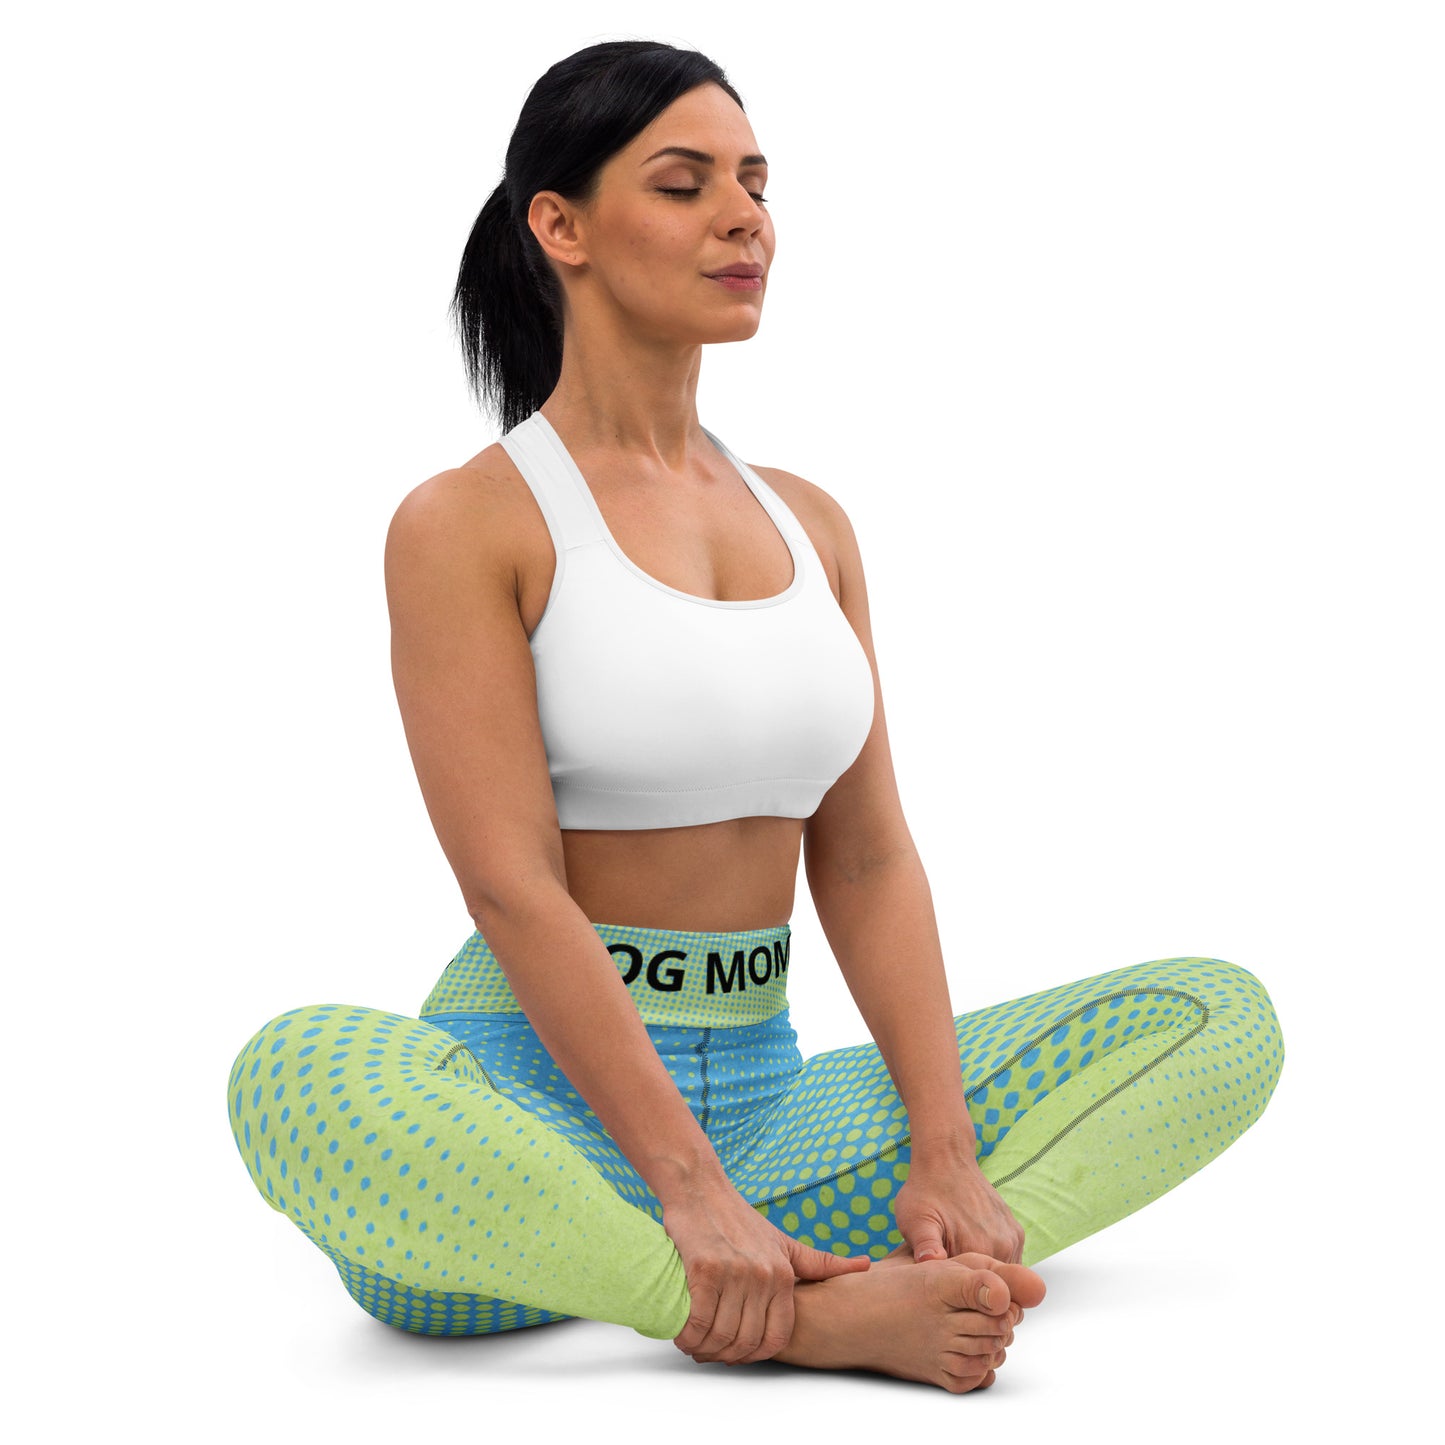 A woman is sitting in a Sweetest Paw Yoga Leggings Multi.